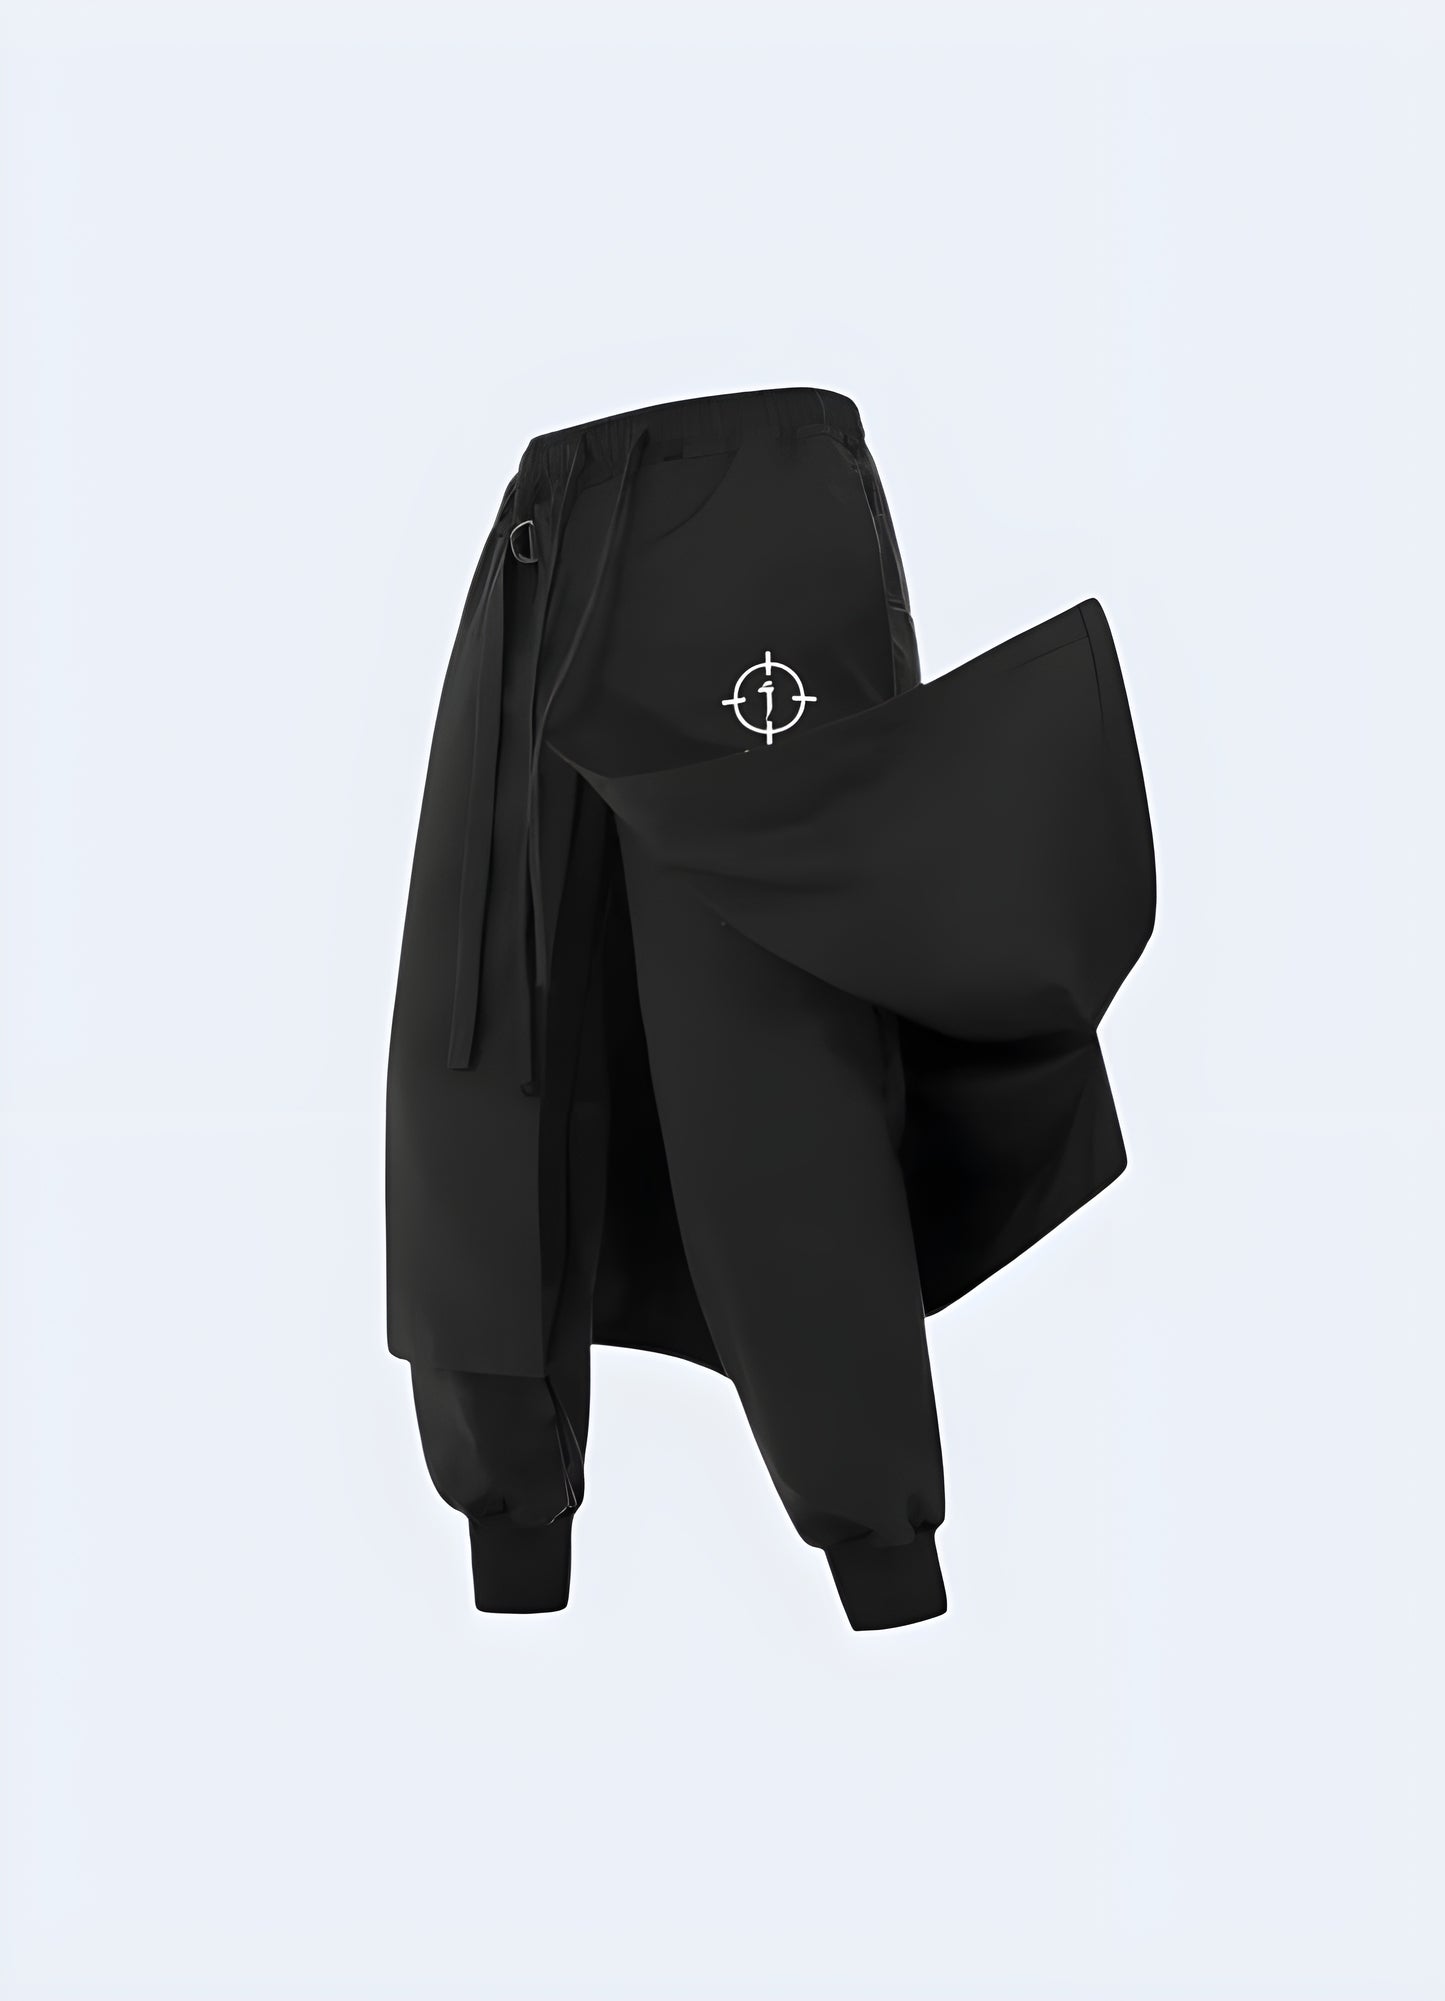 streetwear design black ninja pants front view.